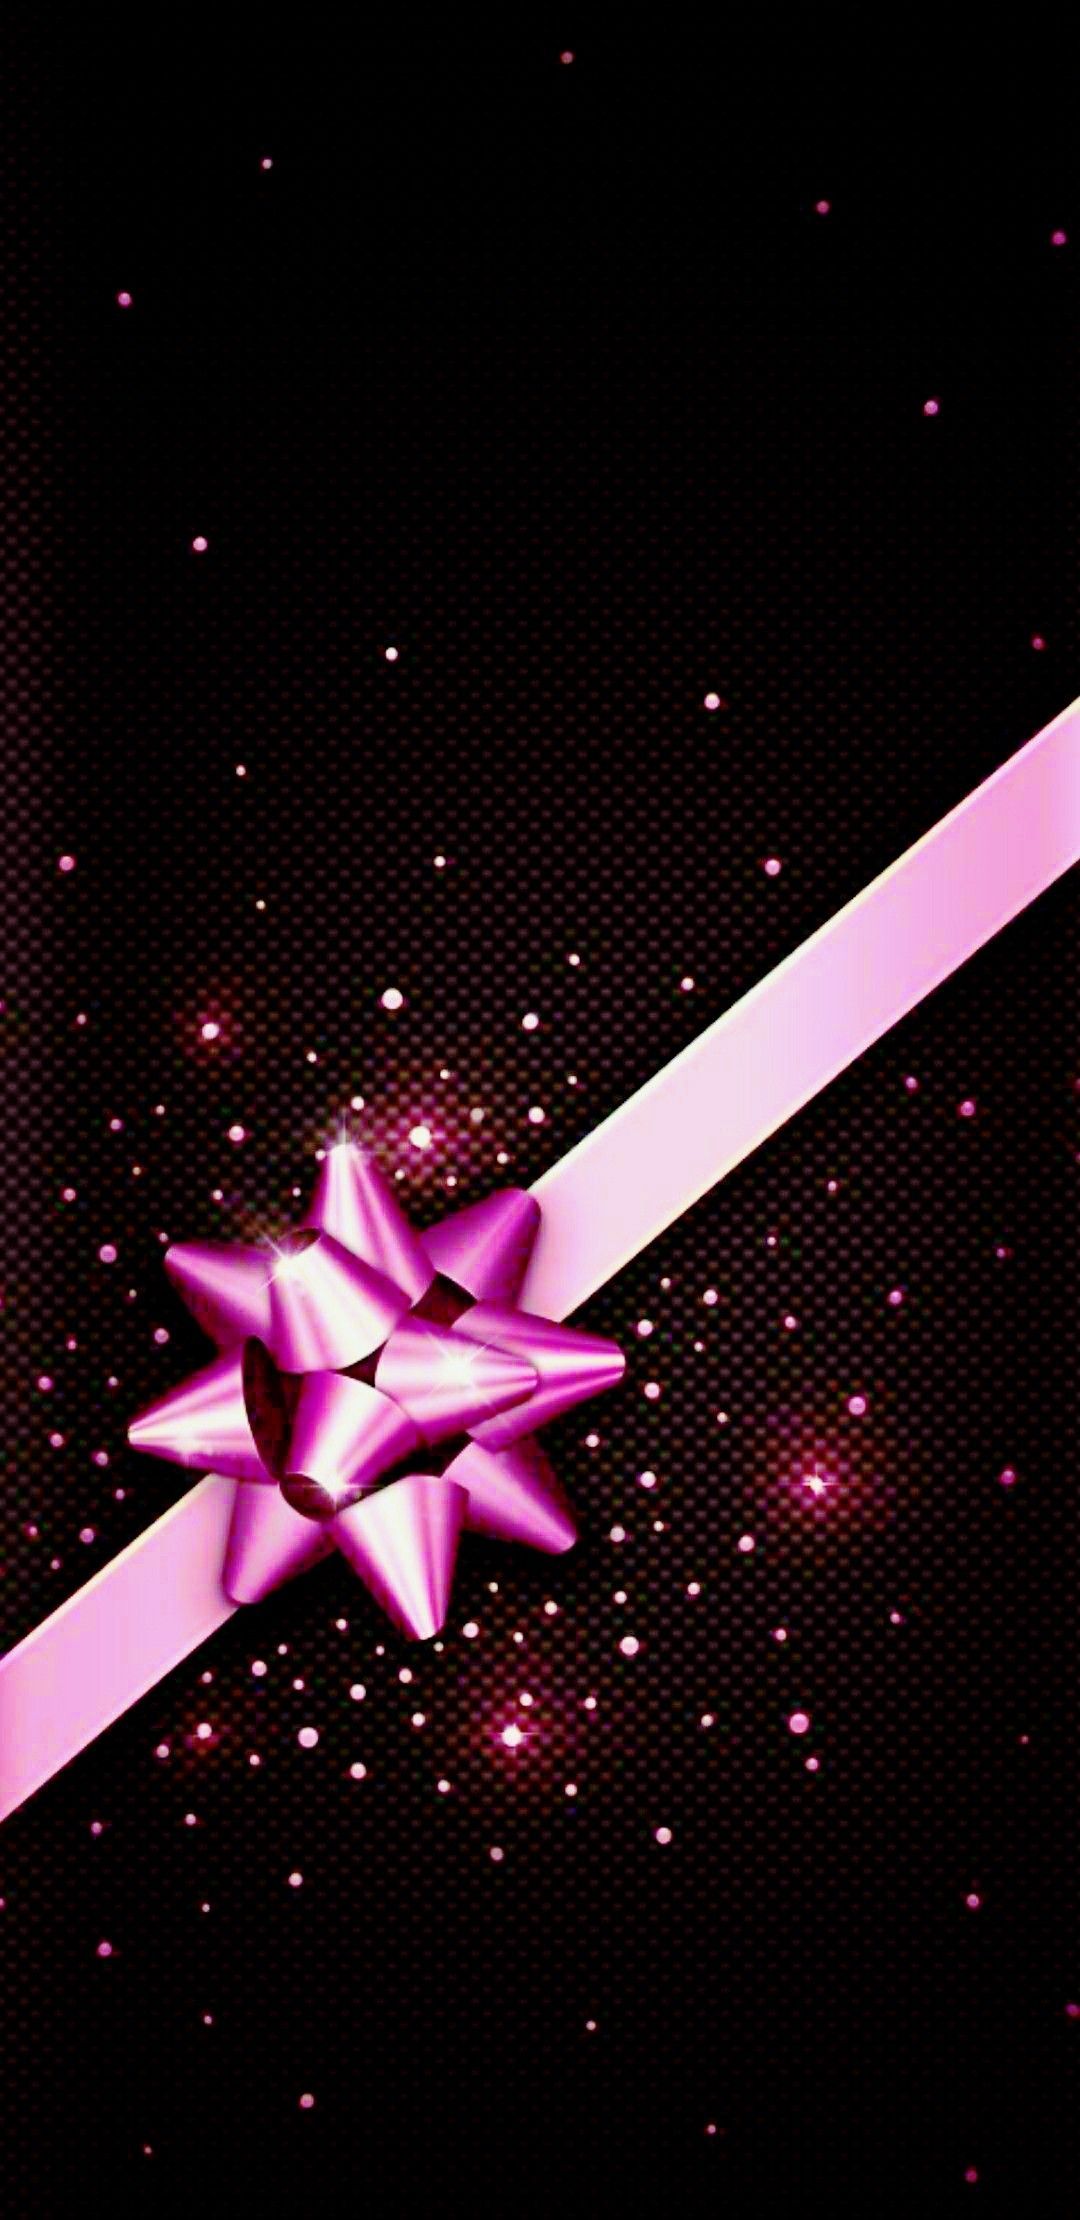 Black and pink. Birthday wallpaper, Flowery wallpaper, Cellphone wallpaper